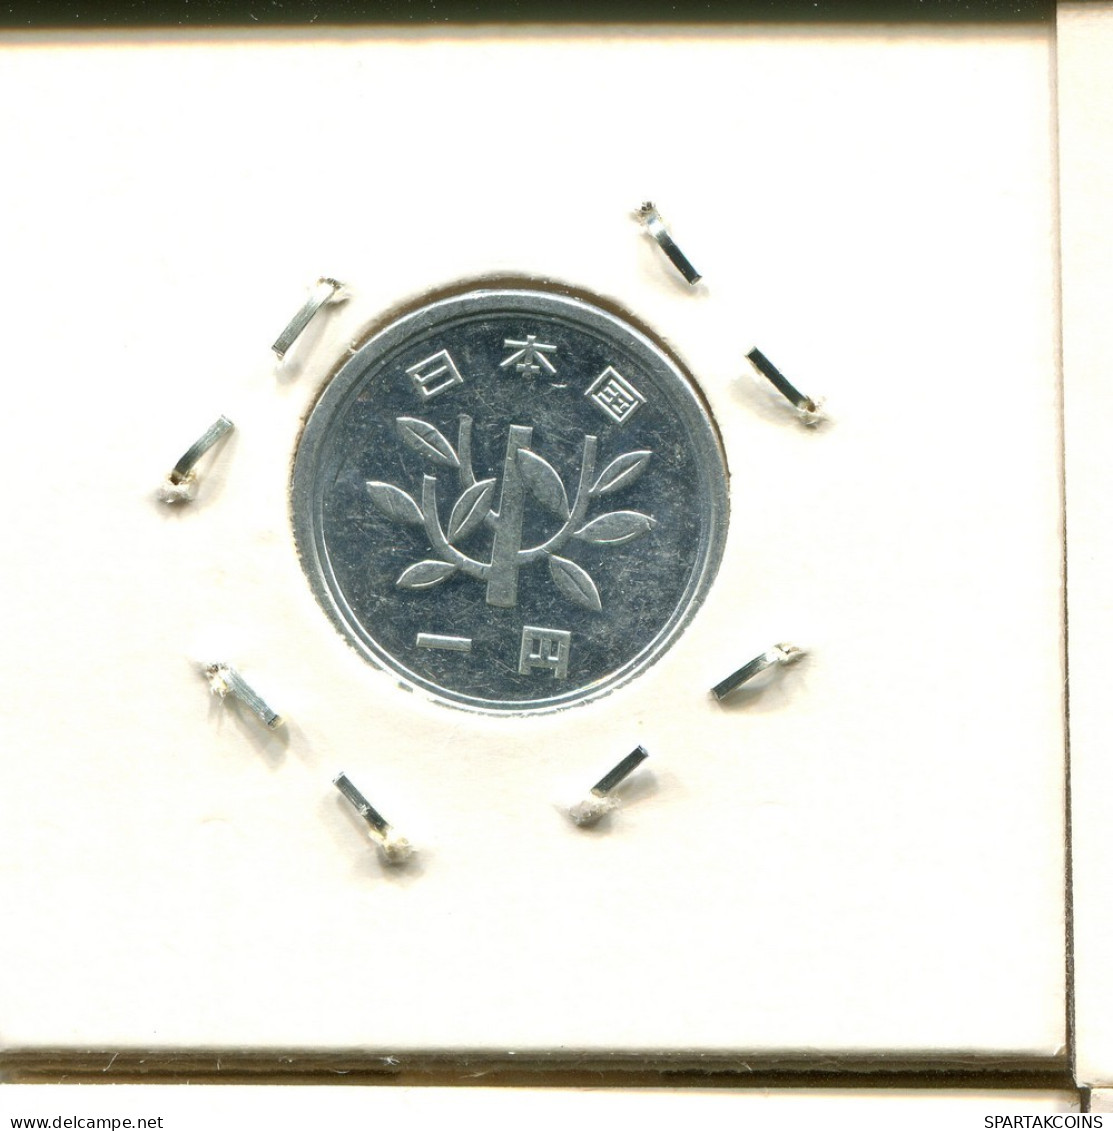 1 YEN 1982 JAPAN Coin #BA079.U.A - Giappone